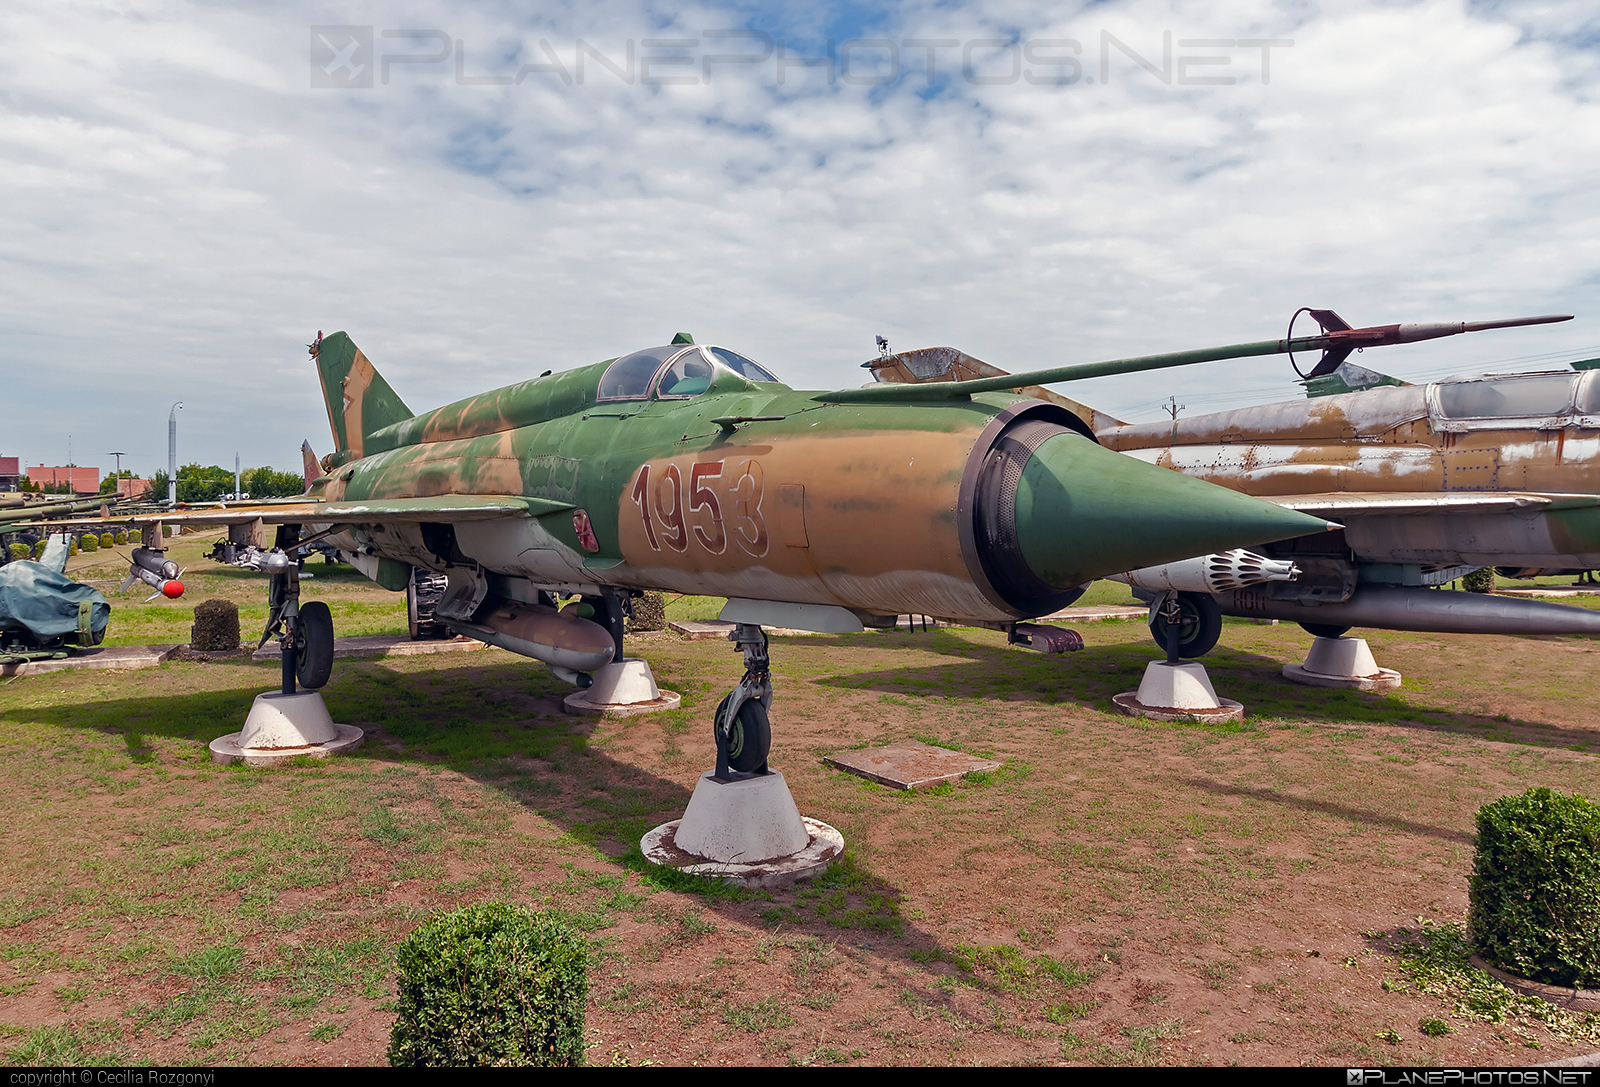 Mikoyan-Gurevich MiG-21bis - 1953 operated by Magyar Légierő (Hungarian Air Force) #hungarianairforce #magyarlegiero #mig #mig21 #mig21bis #mikoyangurevich